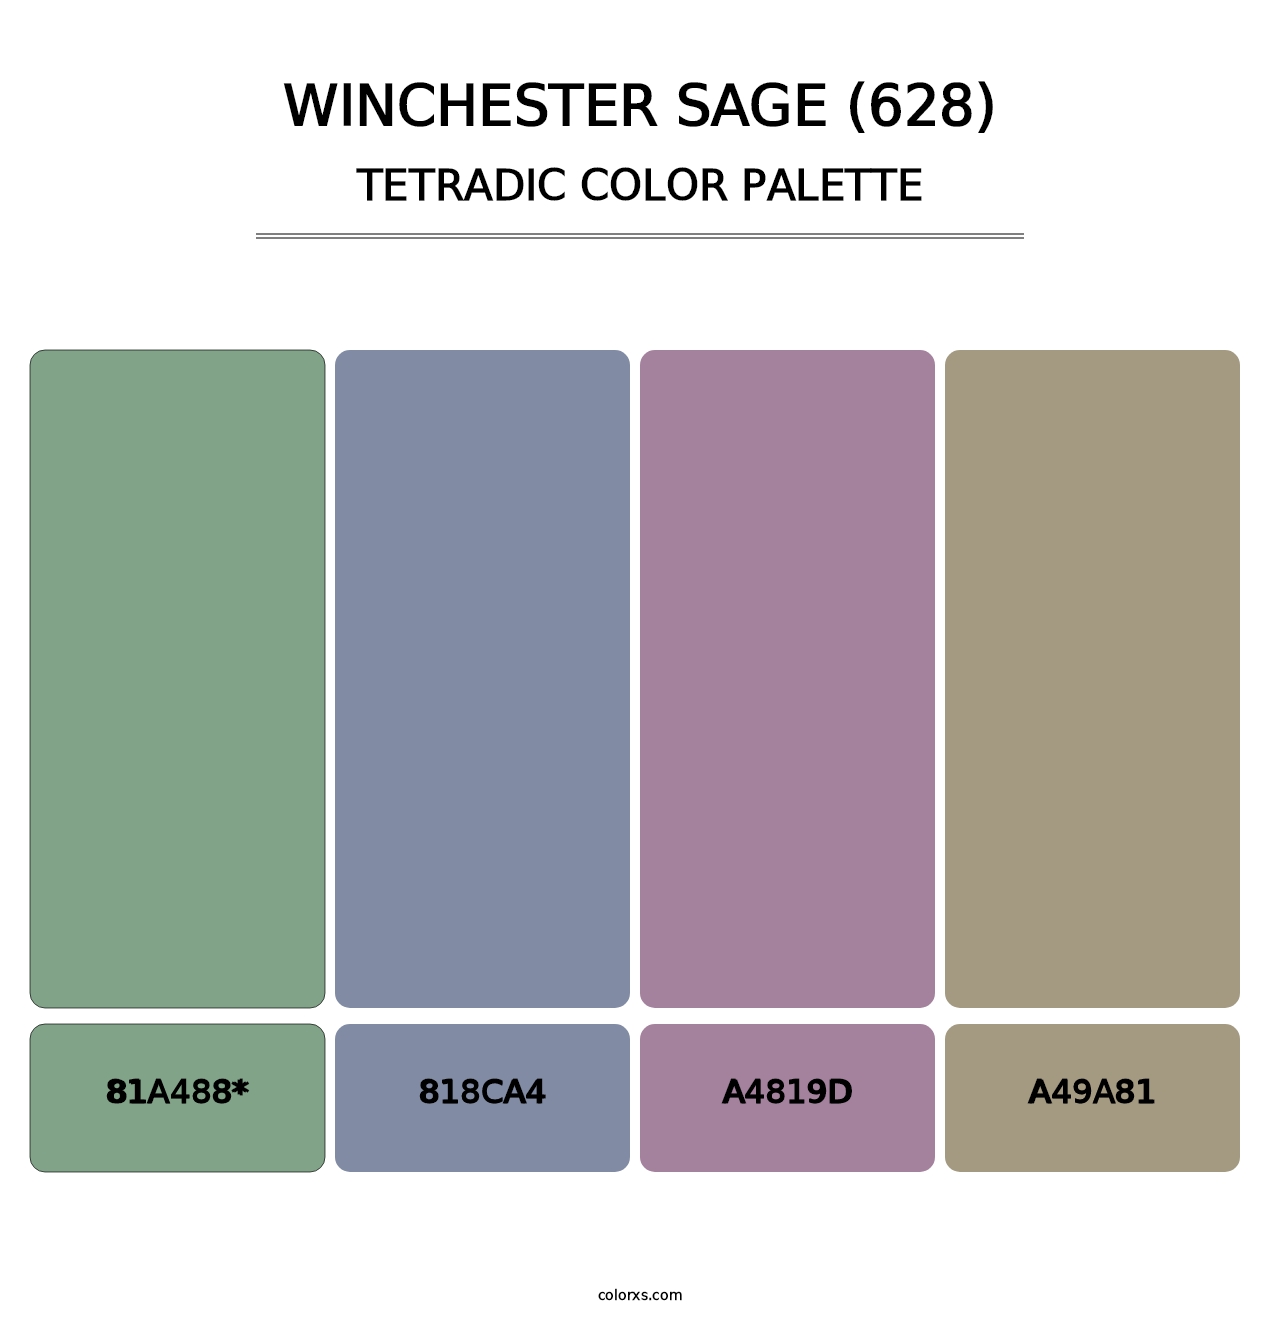 Winchester Sage (628) - Tetradic Color Palette